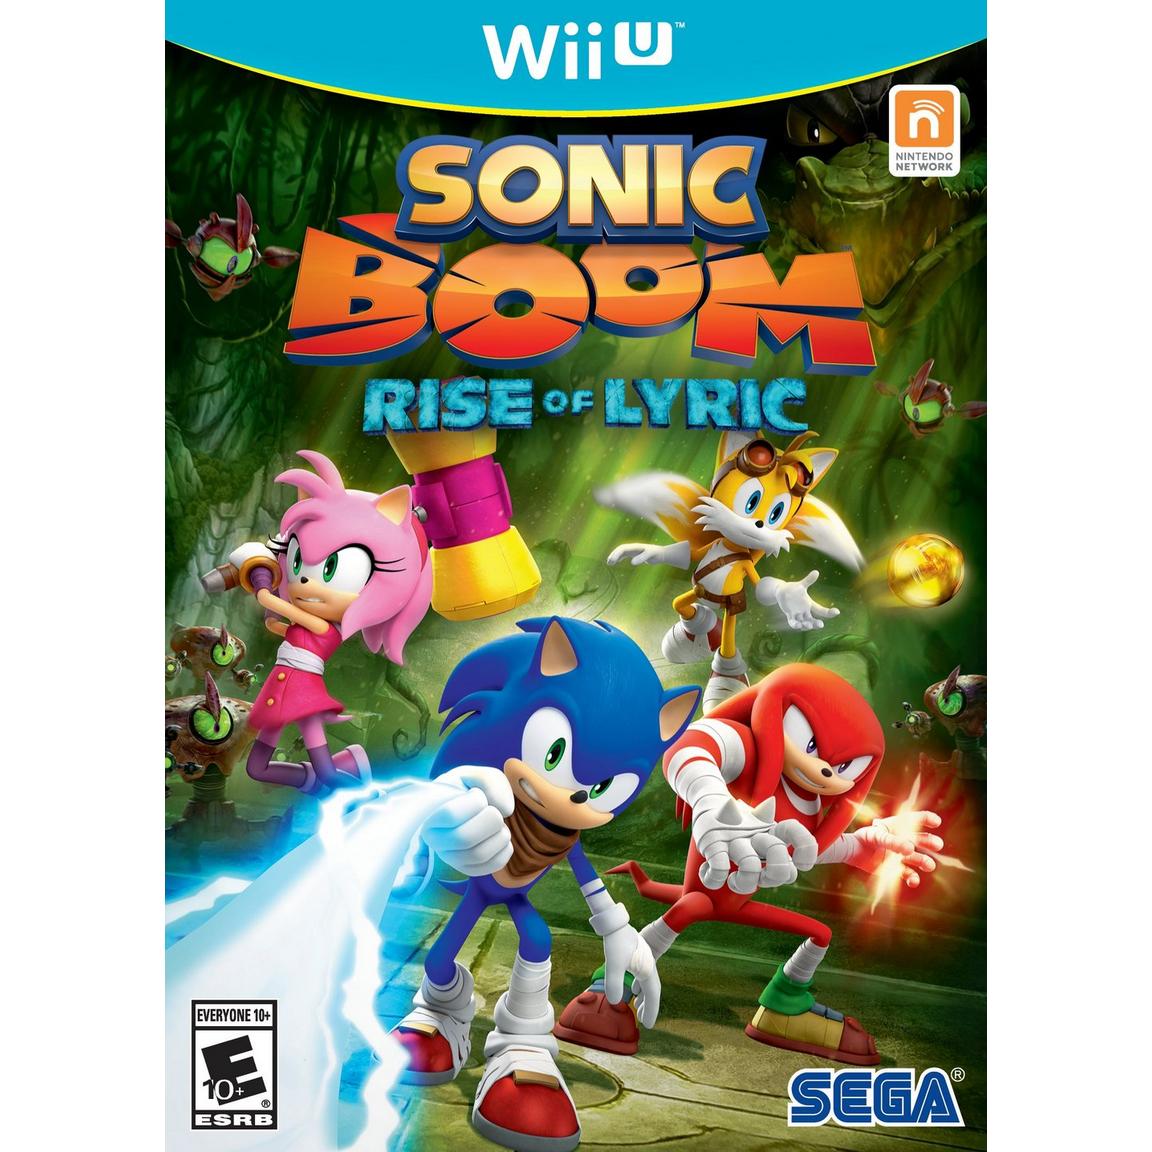 Sonic Boom: Rise of Lyric - Nintendo Wii U, Pre-Owned -  SEGA